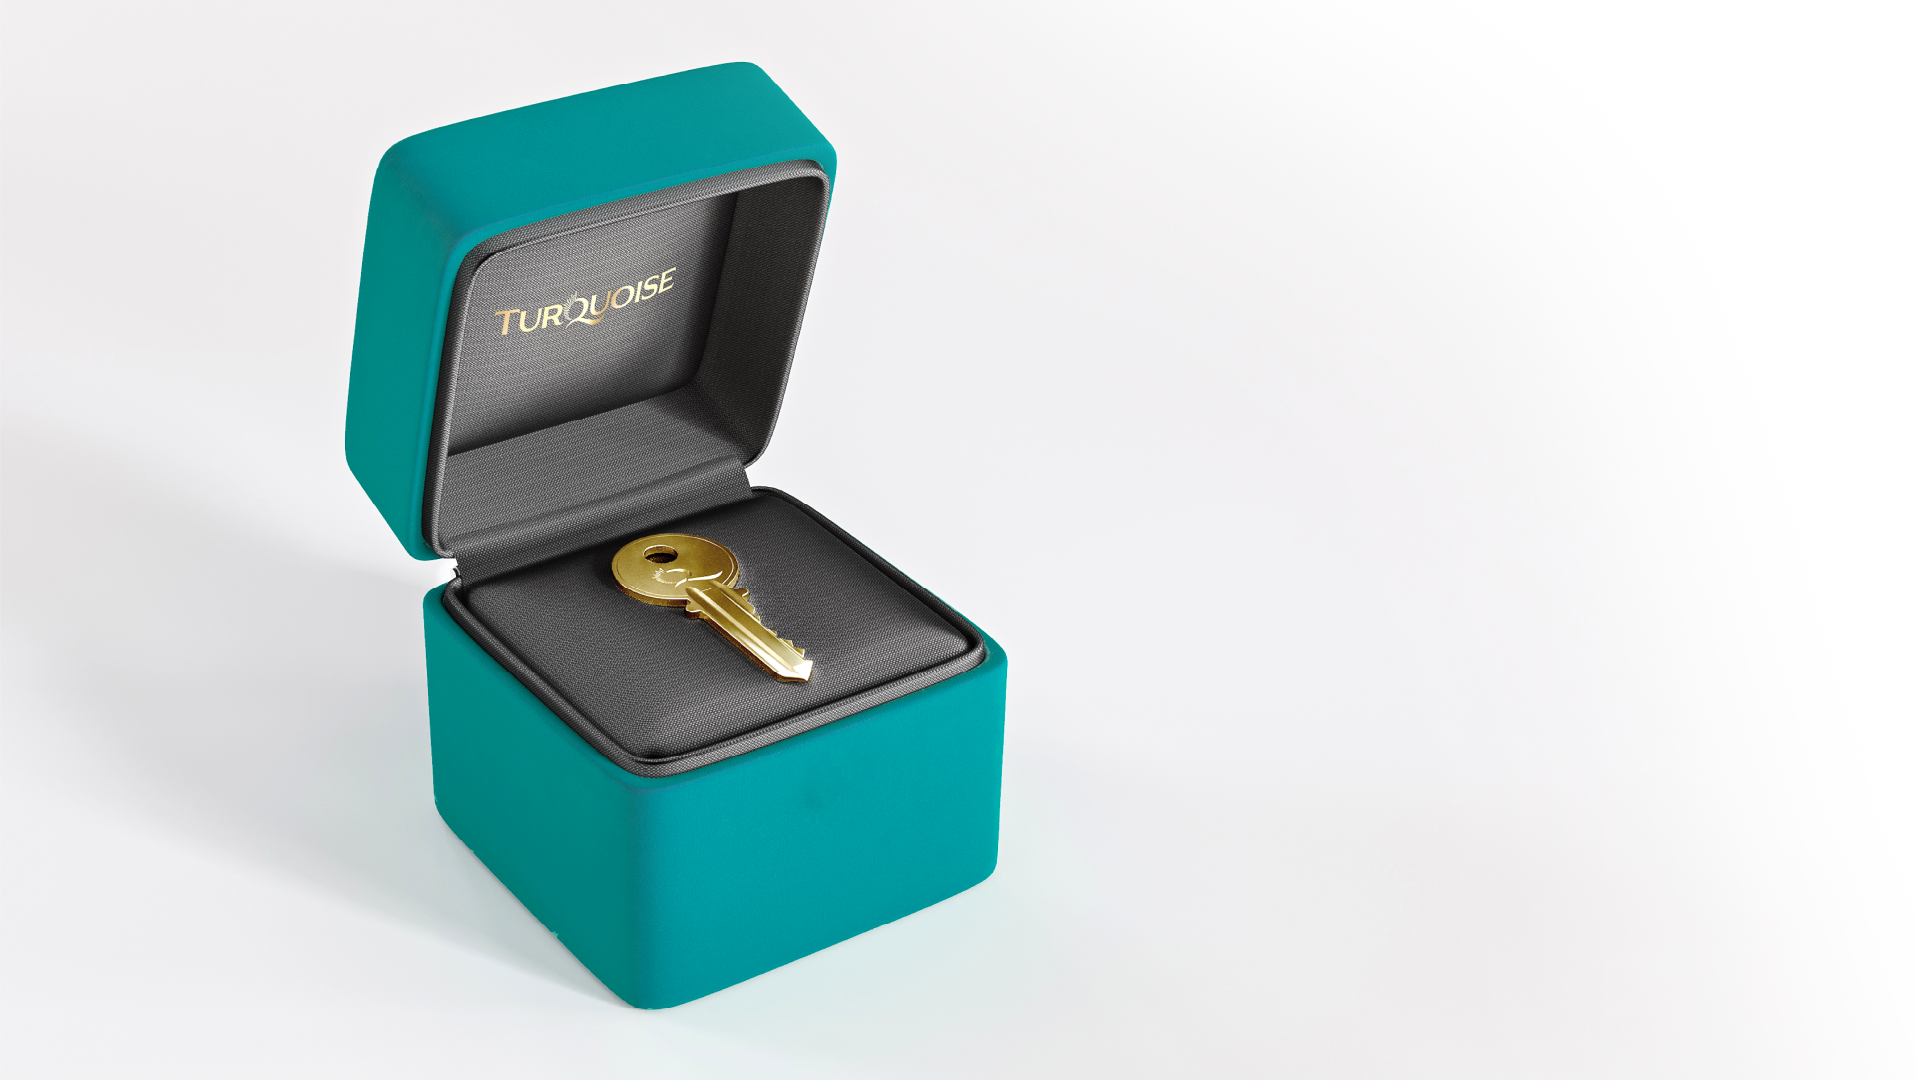 Golden key on a gift box